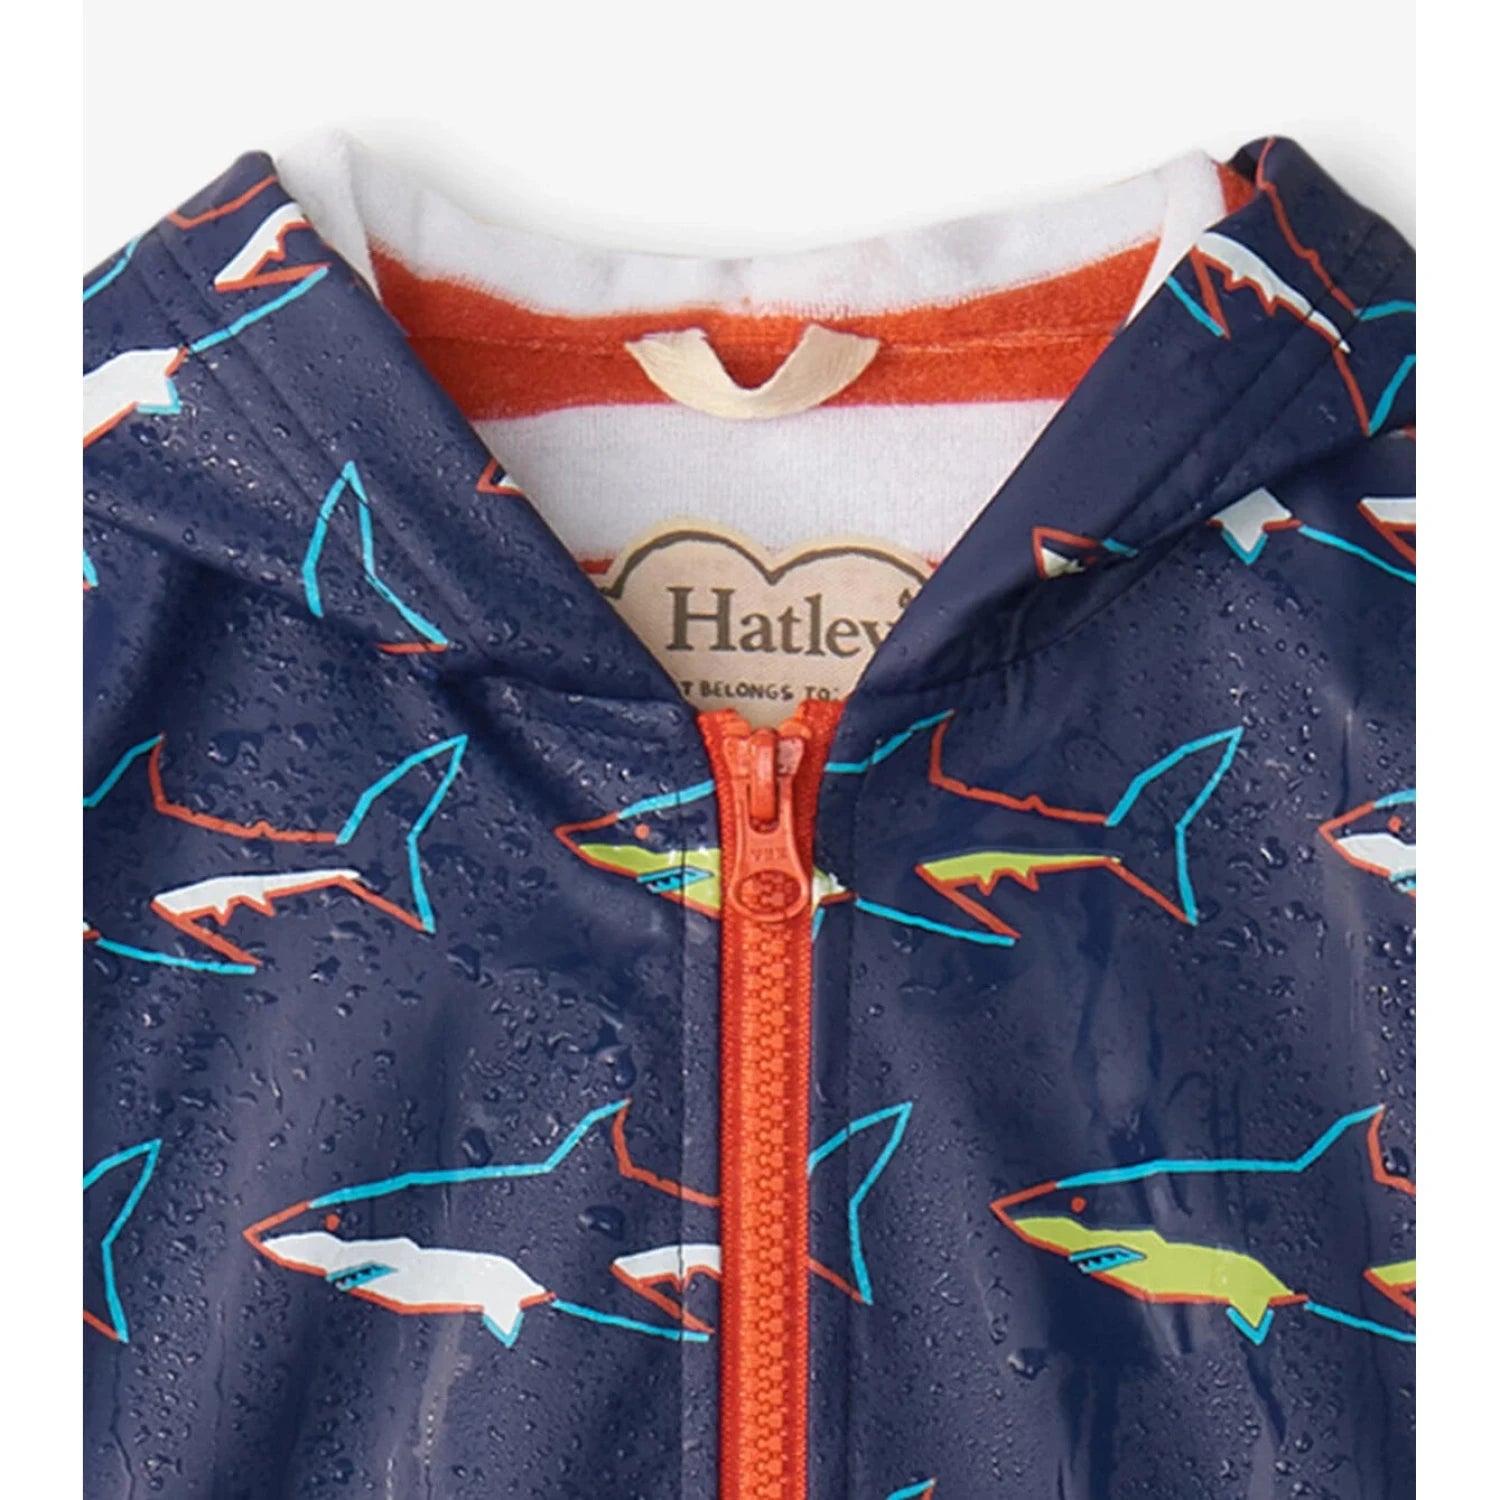 Hatley Boy's Sharks Zip-Up Rain Jacket shown in the Shark design option. Zipper view.